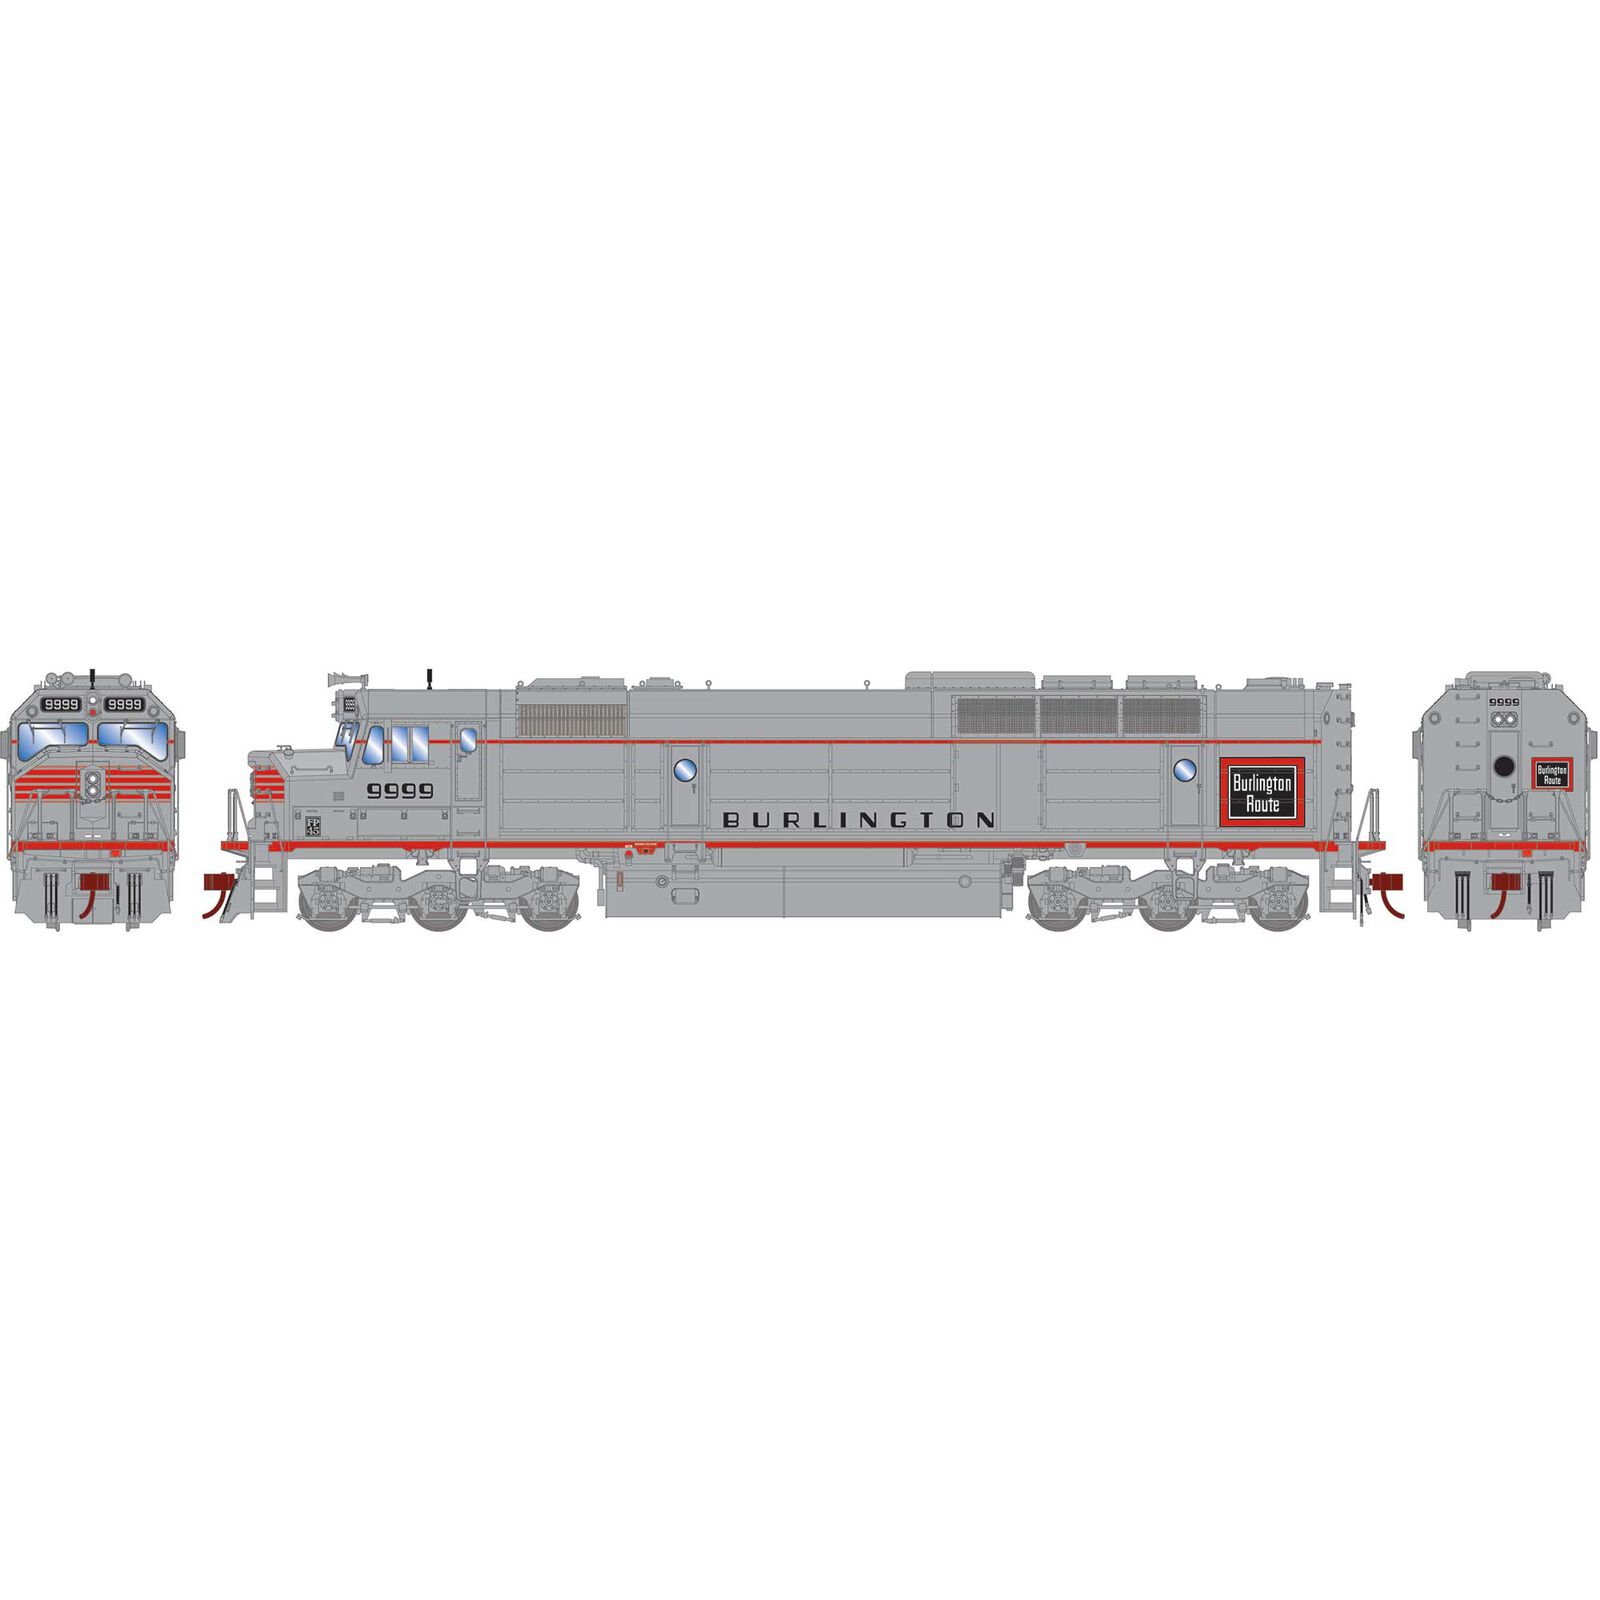 HO FP45 Locomotive with DCC &Sound, CB&Q #9999